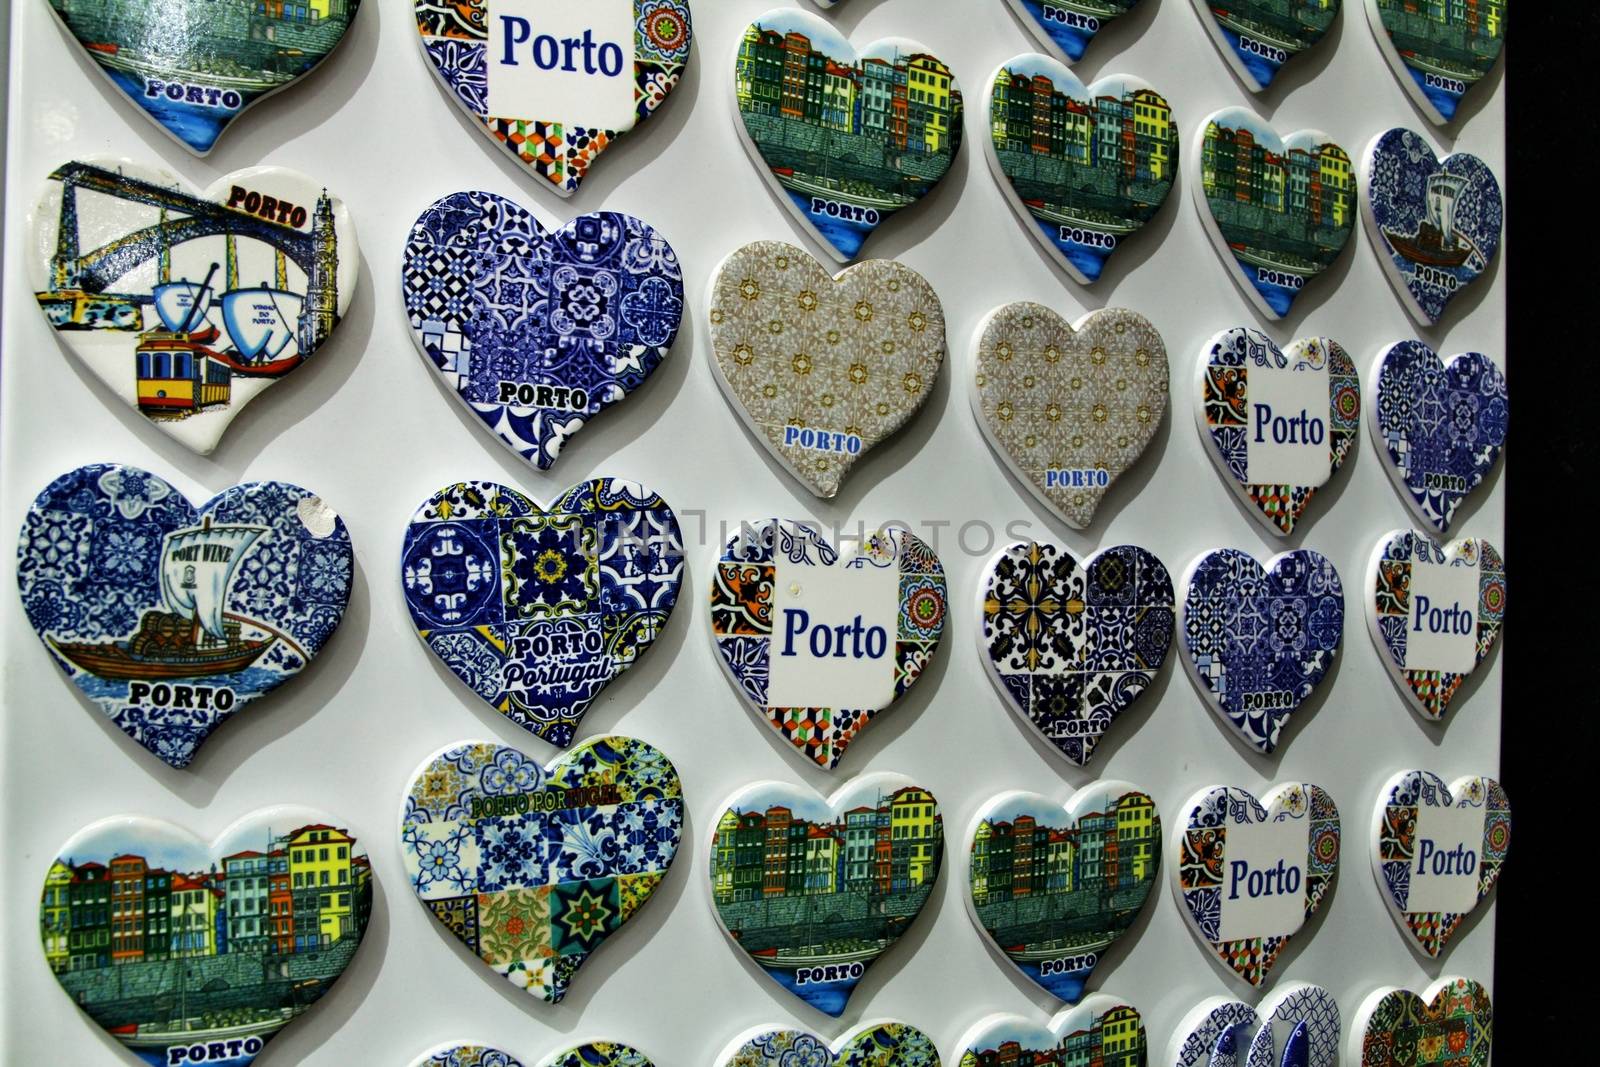 Fridge souvenir magnets imitating portuguese tiles with the word Porto writen on them for sale in Porto